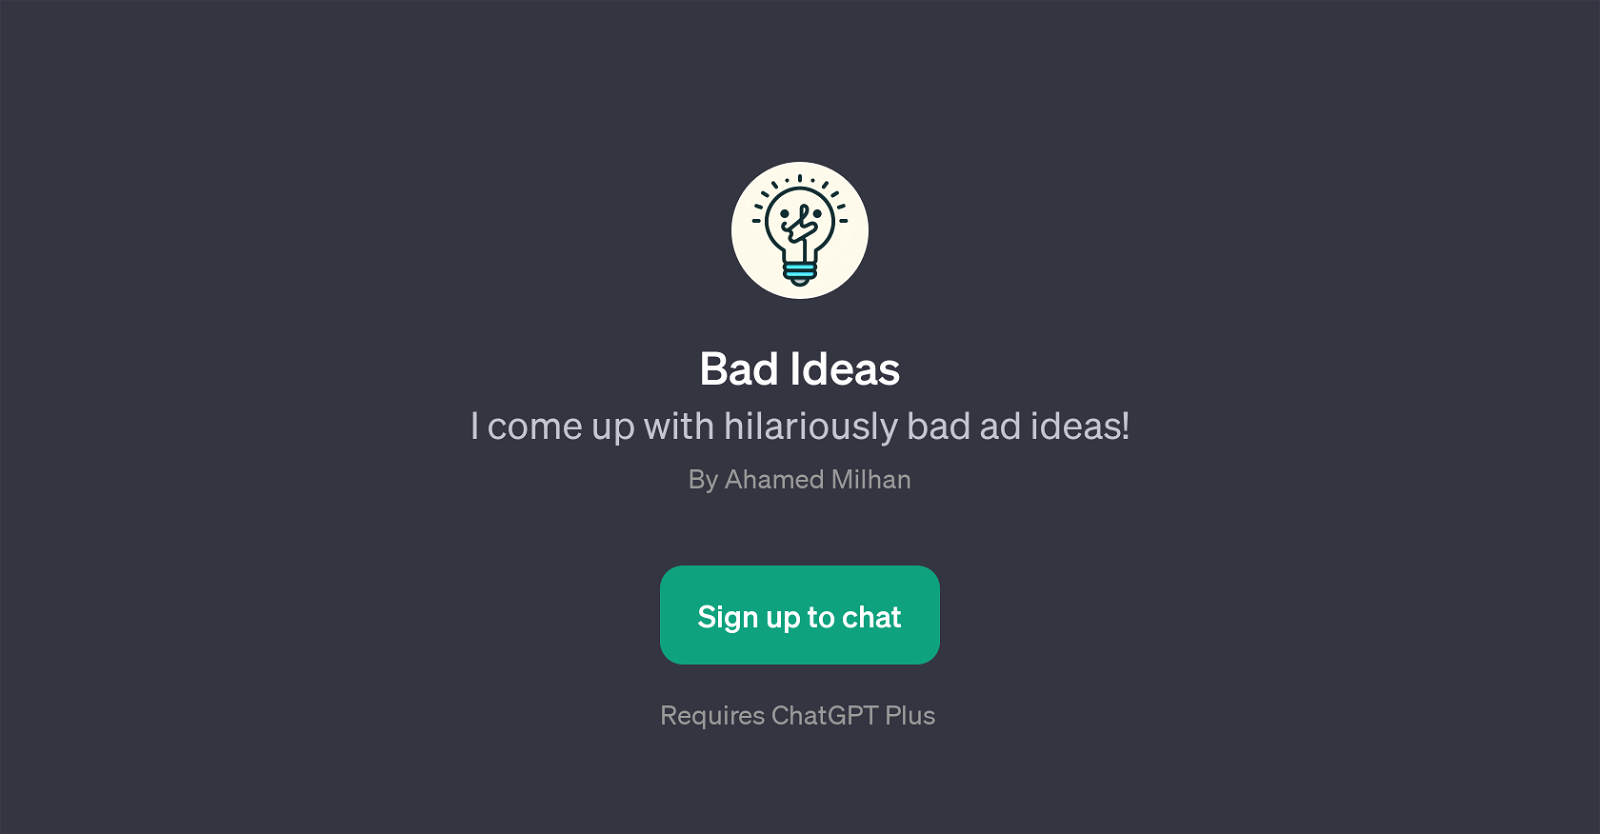 Bad Ideas website